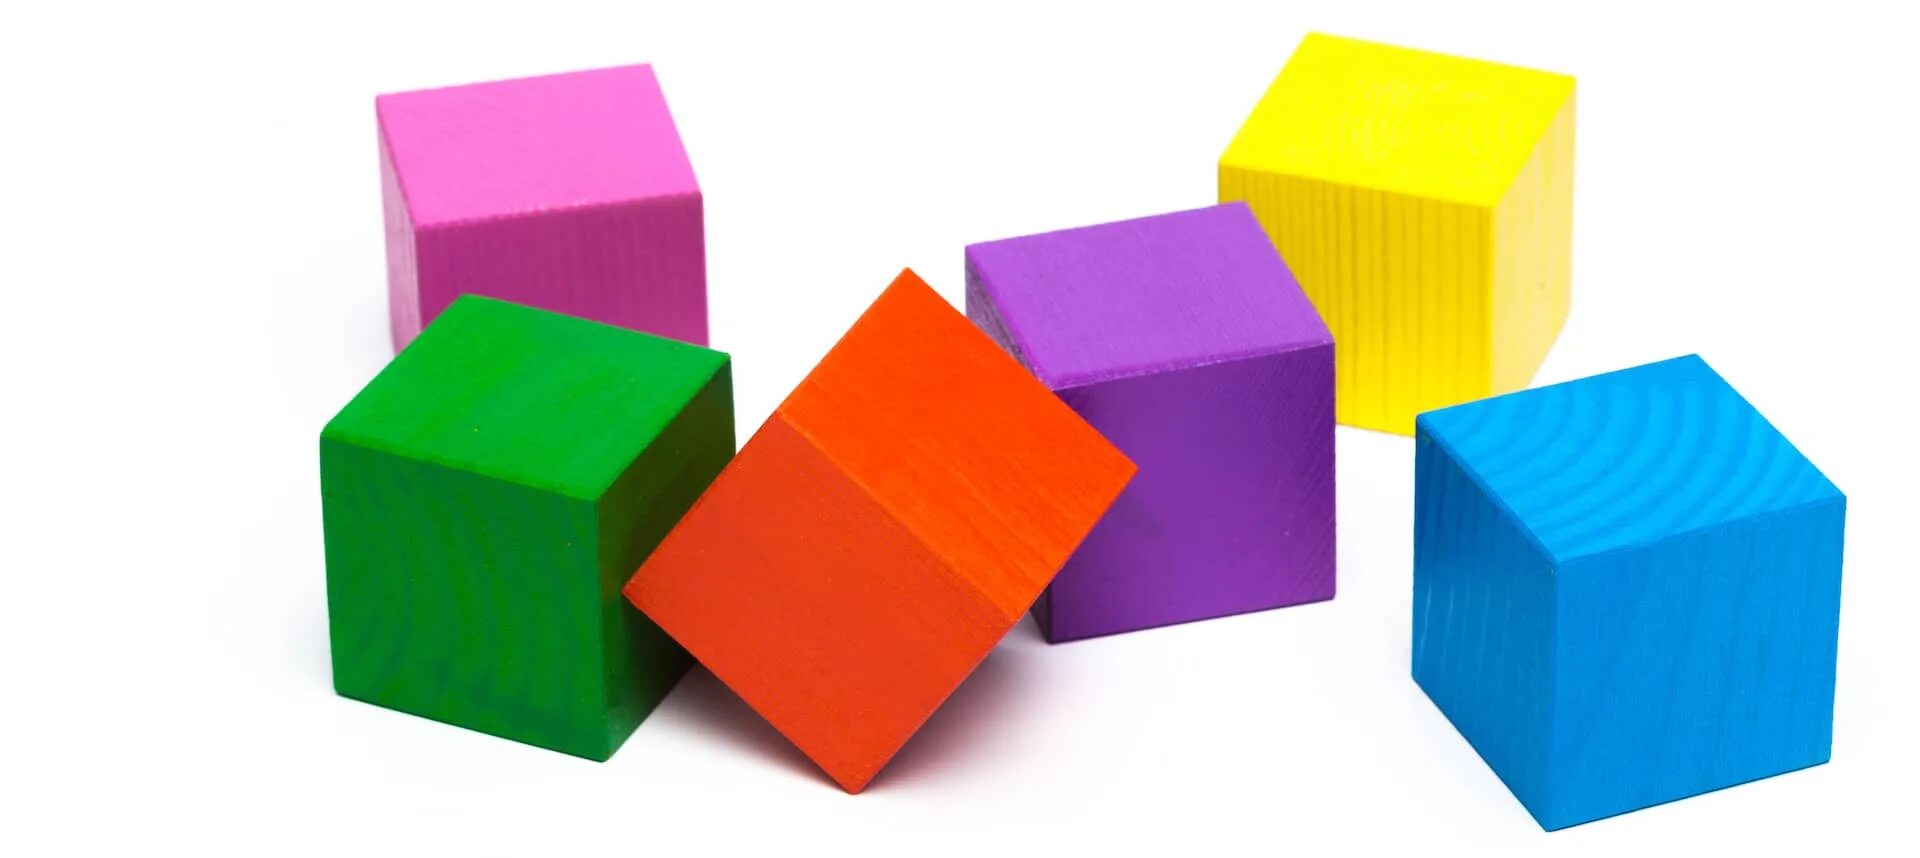 Пластилин кубики. Детские кубики. Разноцветные кубики. Разноцветные кубики для детей. Кубики цветные для детей на прозрачном.